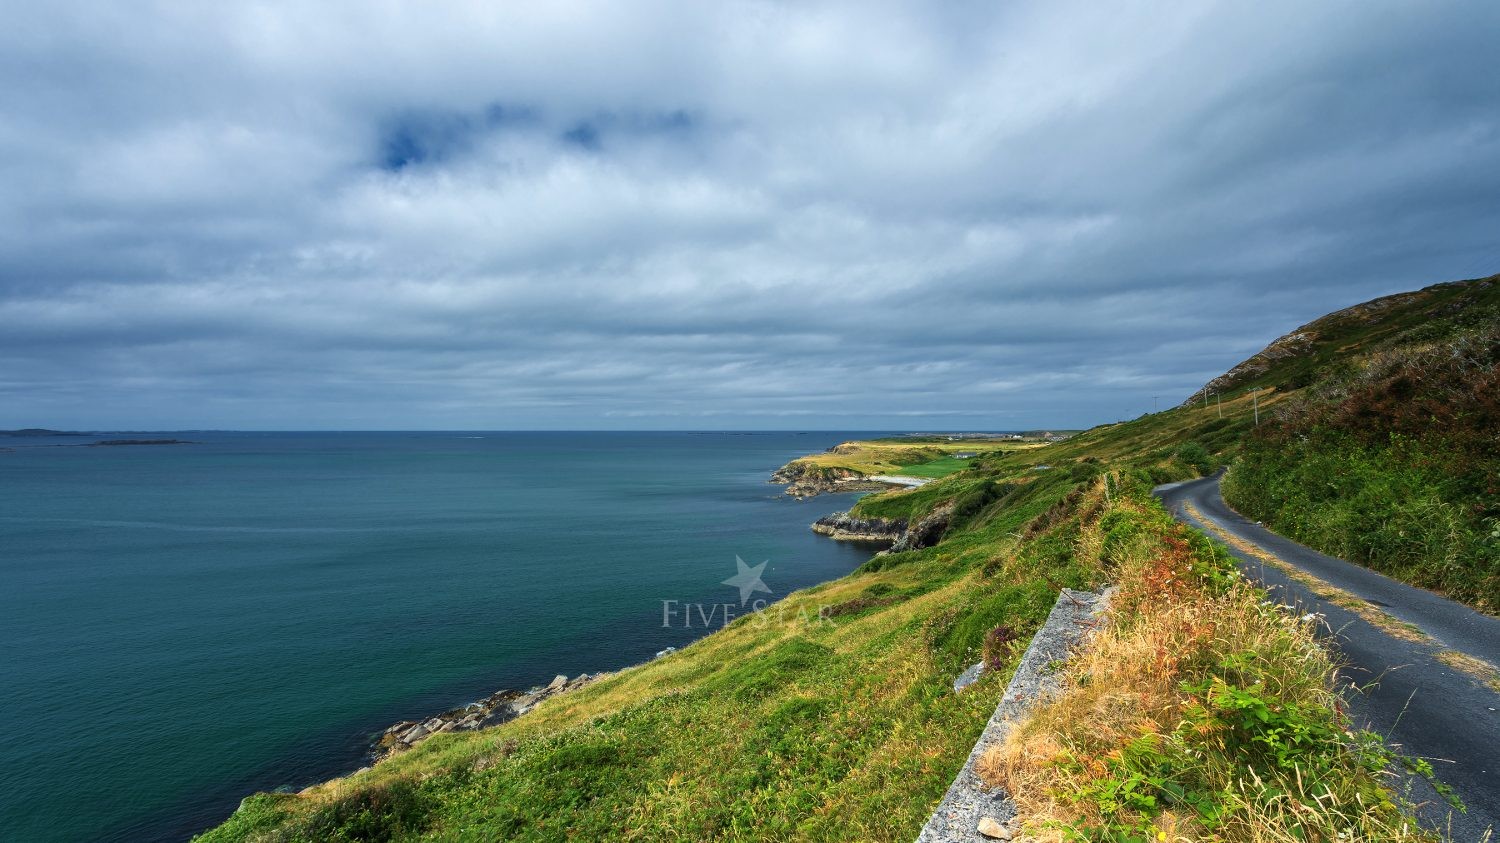 Sky Road Clifden - Wild Atlantic Way